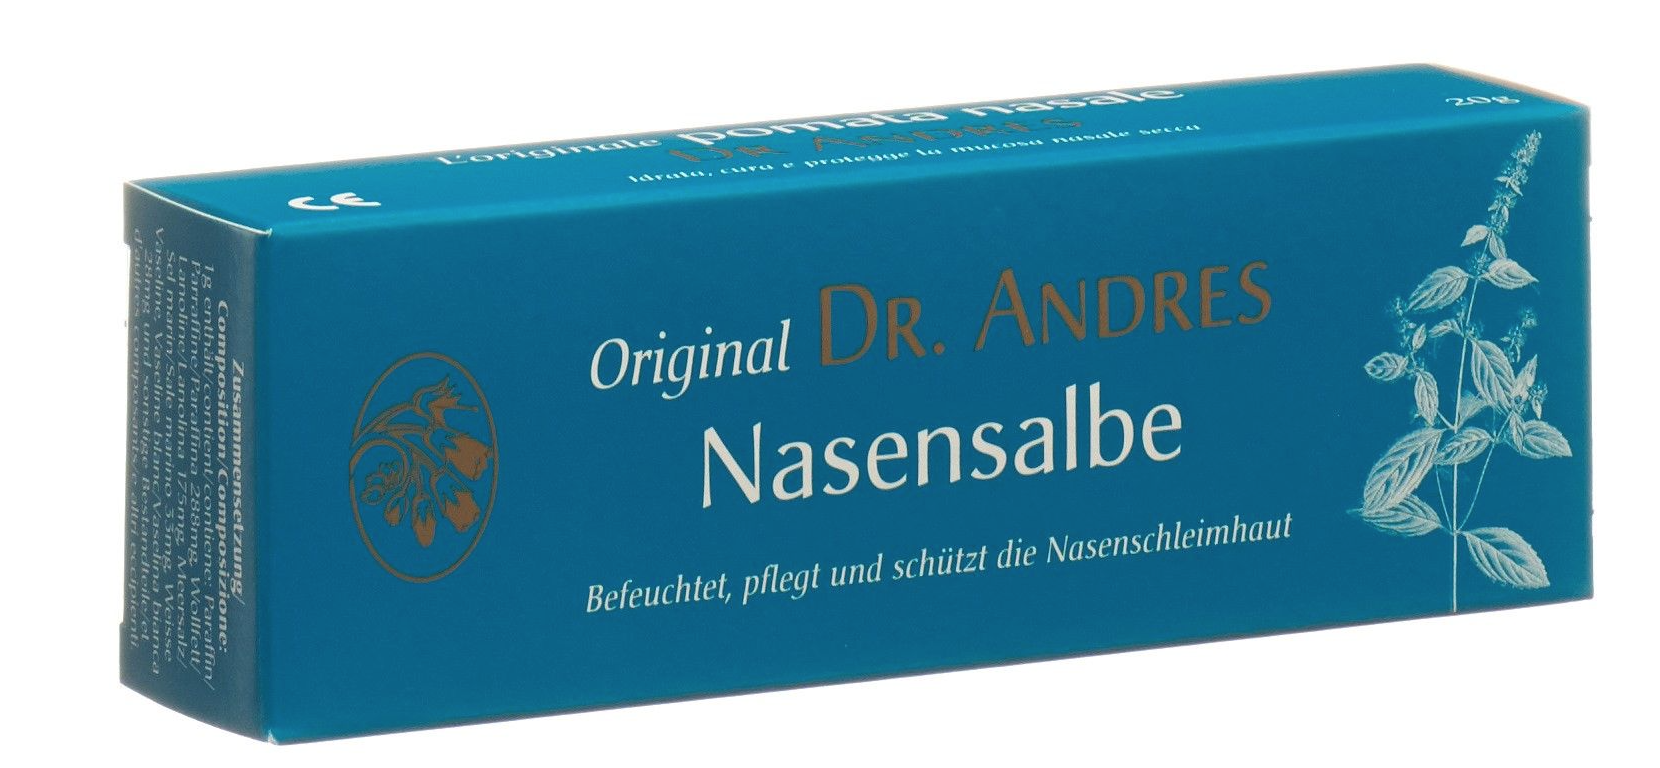 Image of DR. ANDRES Nasensalbe (20g)